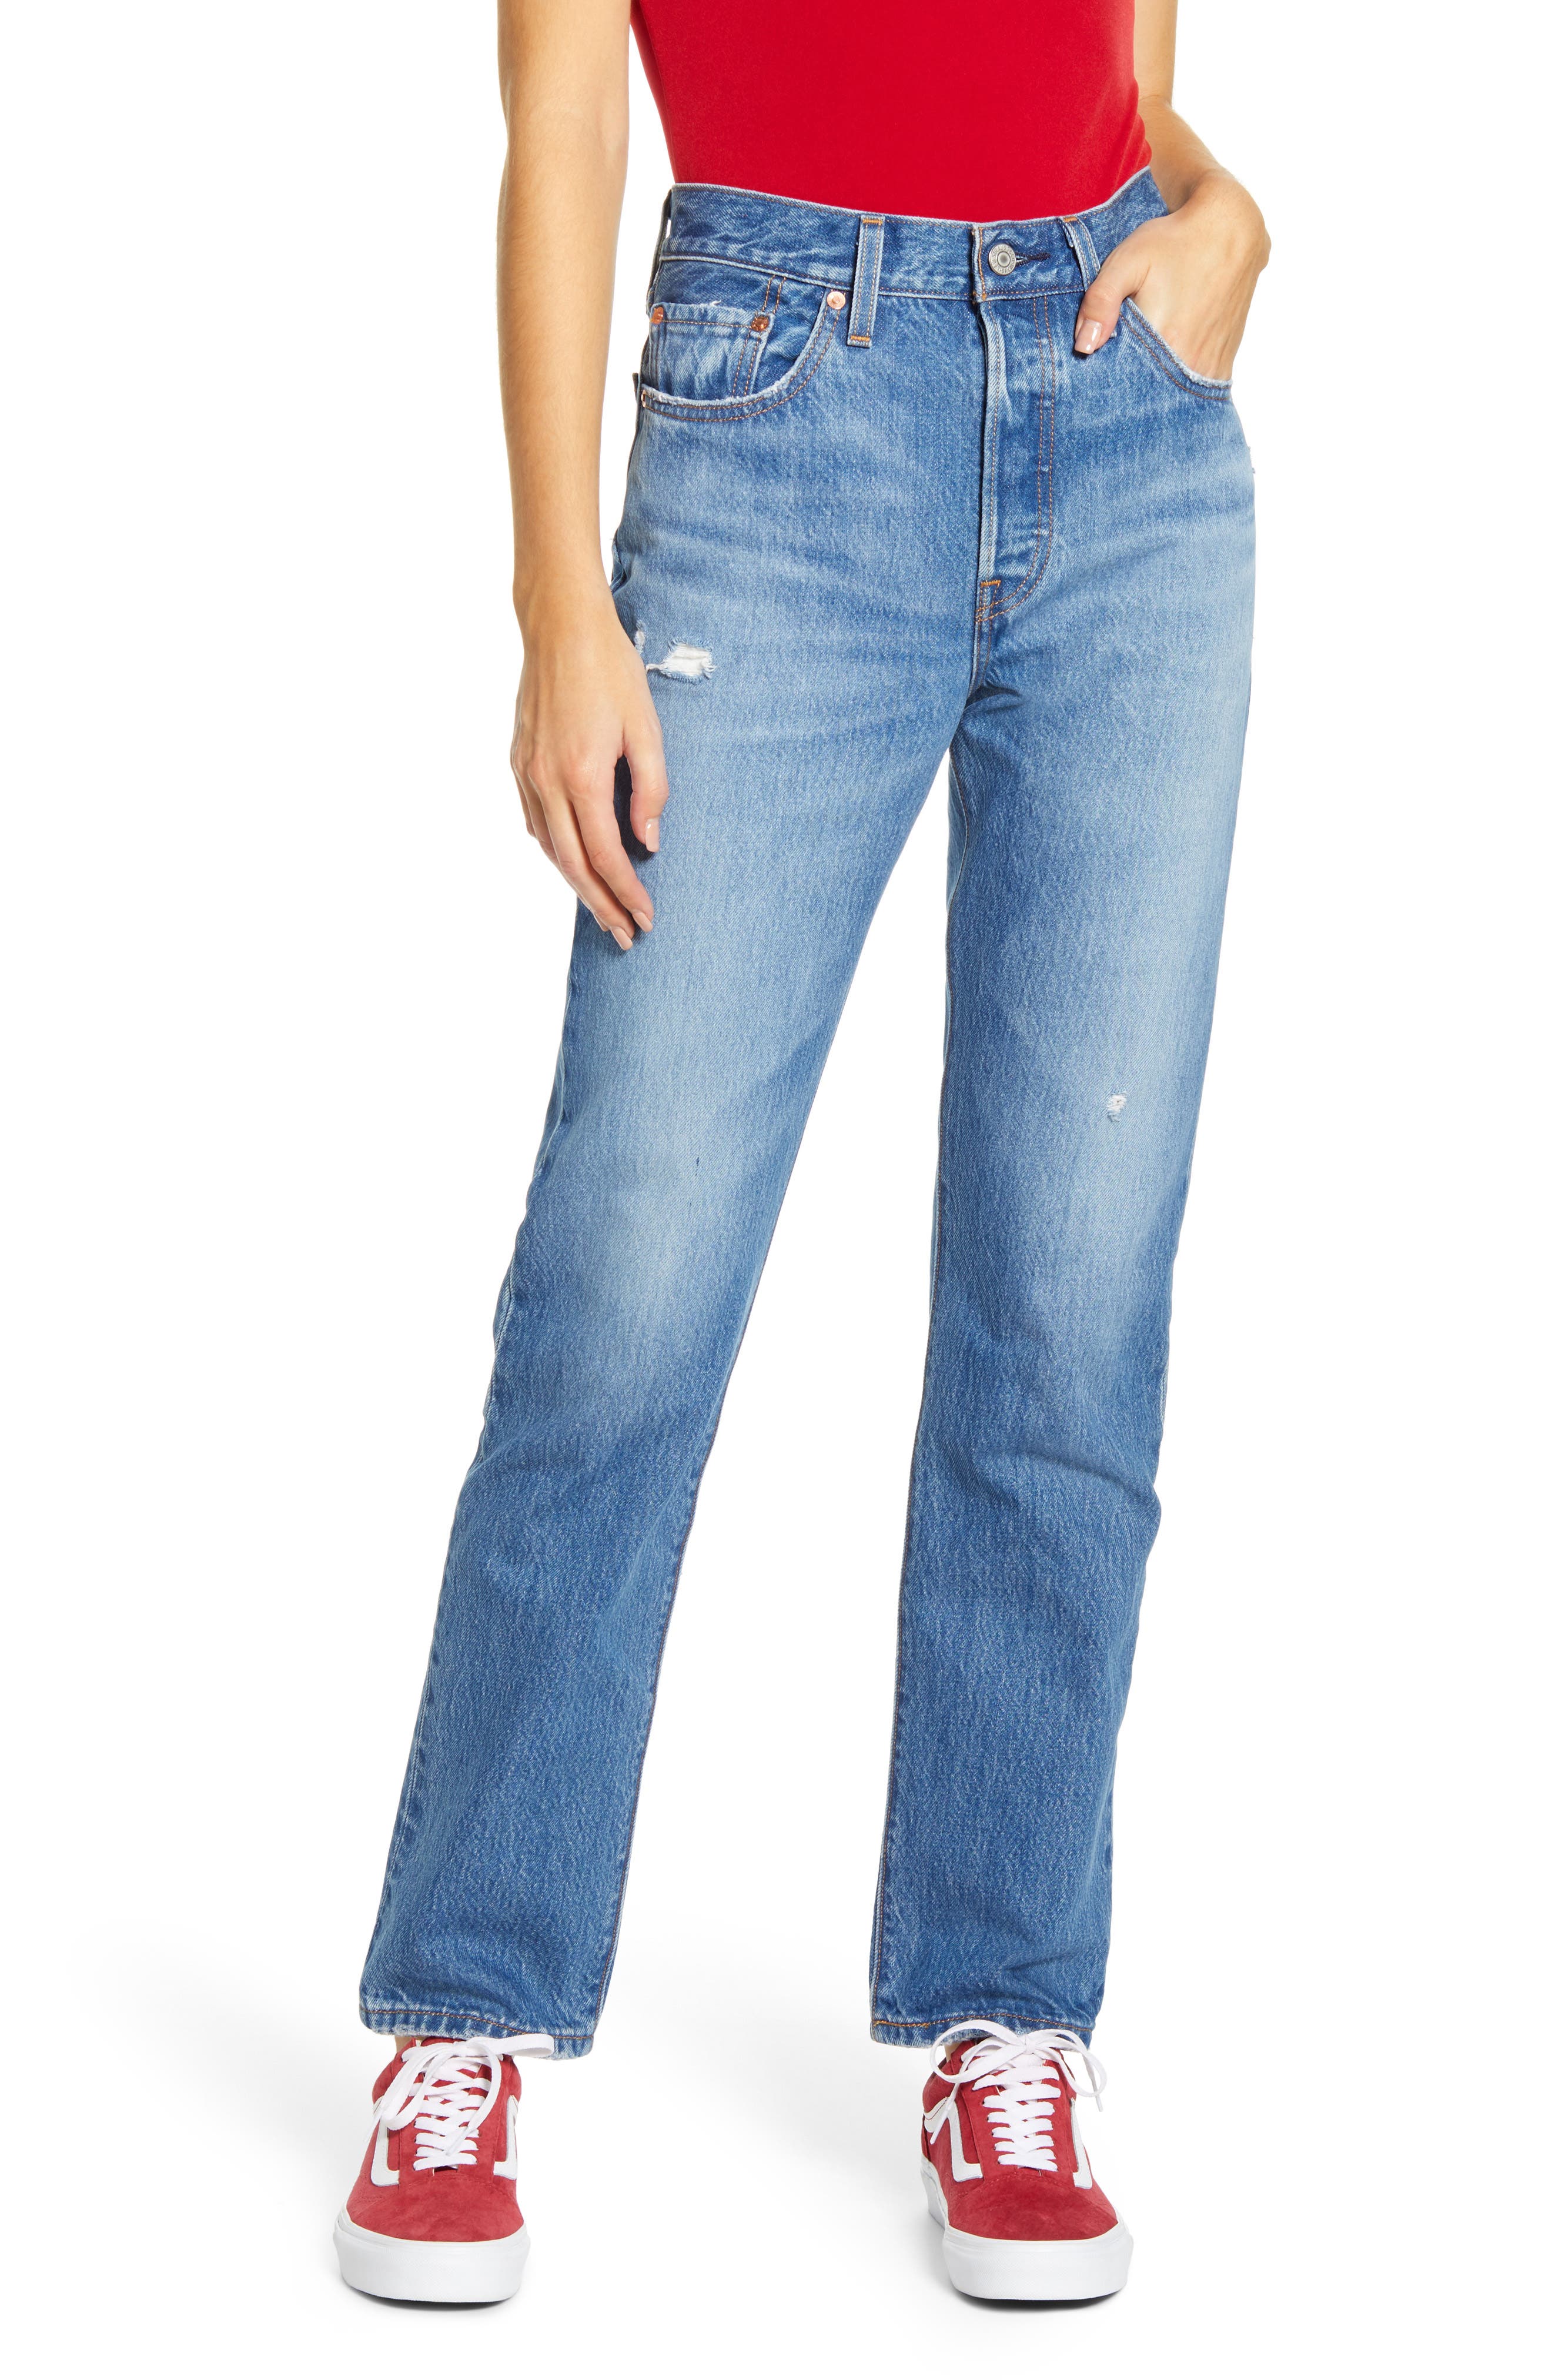 levis 501 black straight jeans